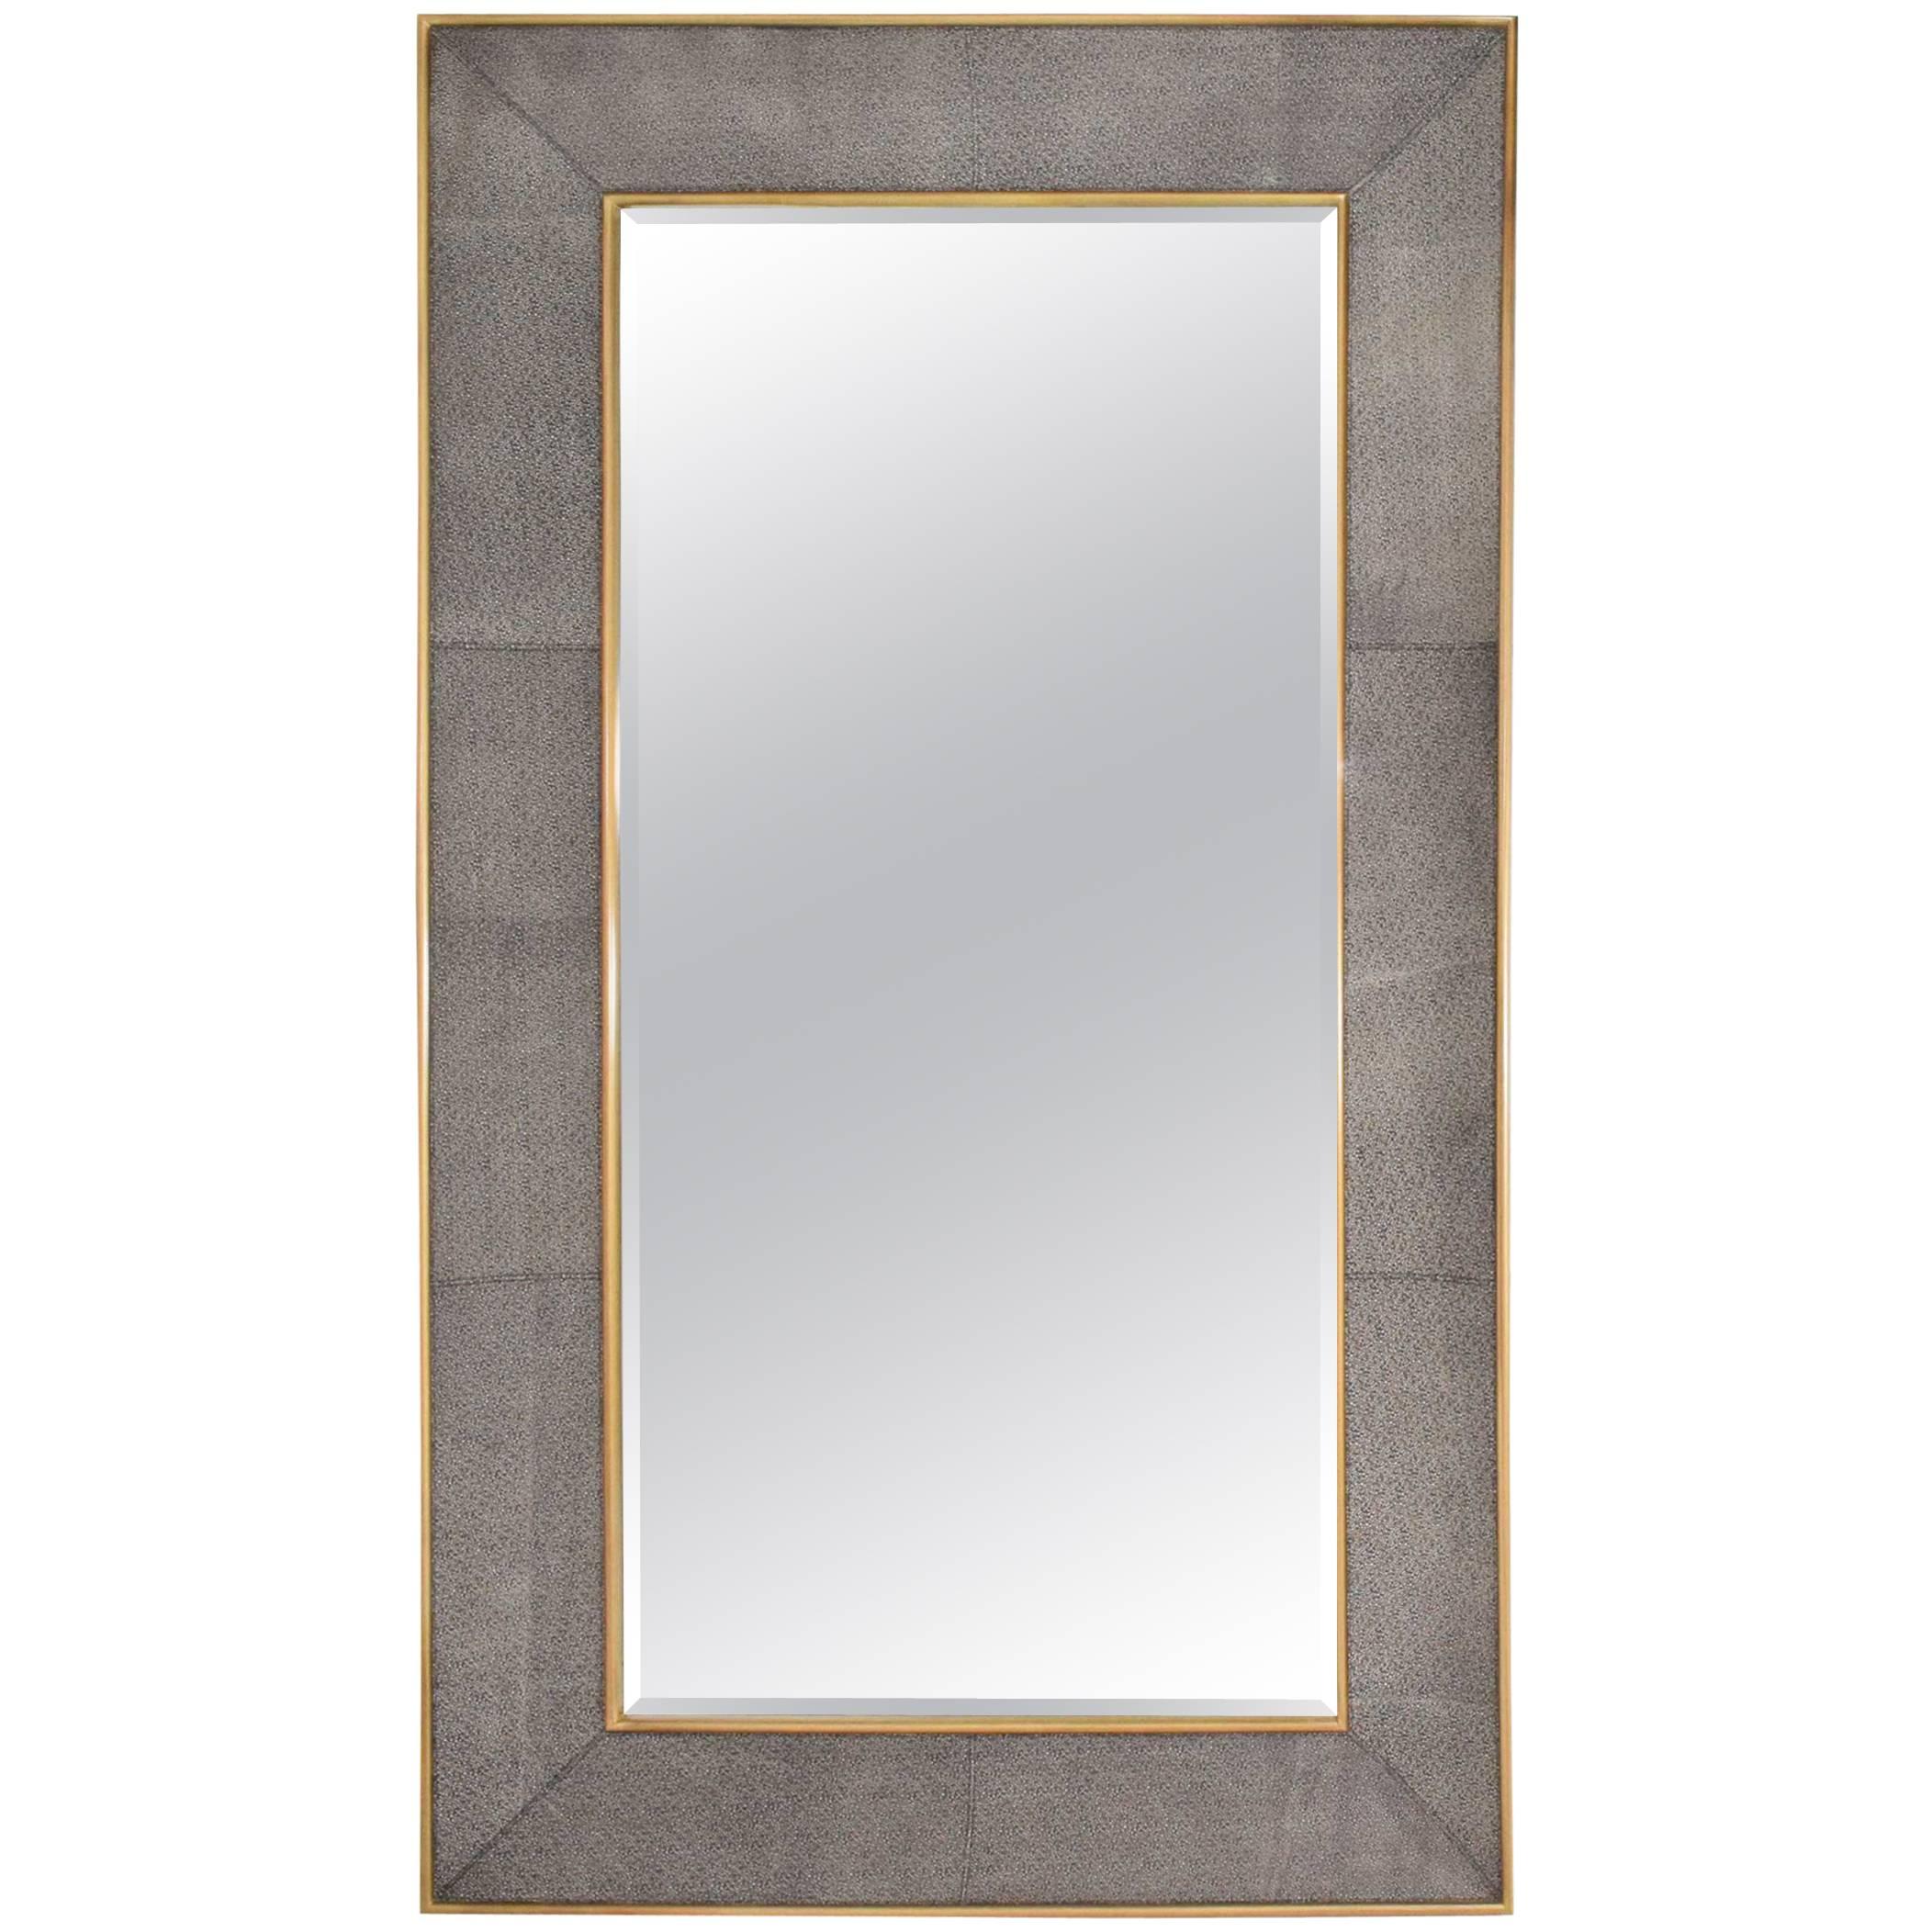 Large Floor or Mantel Mirror